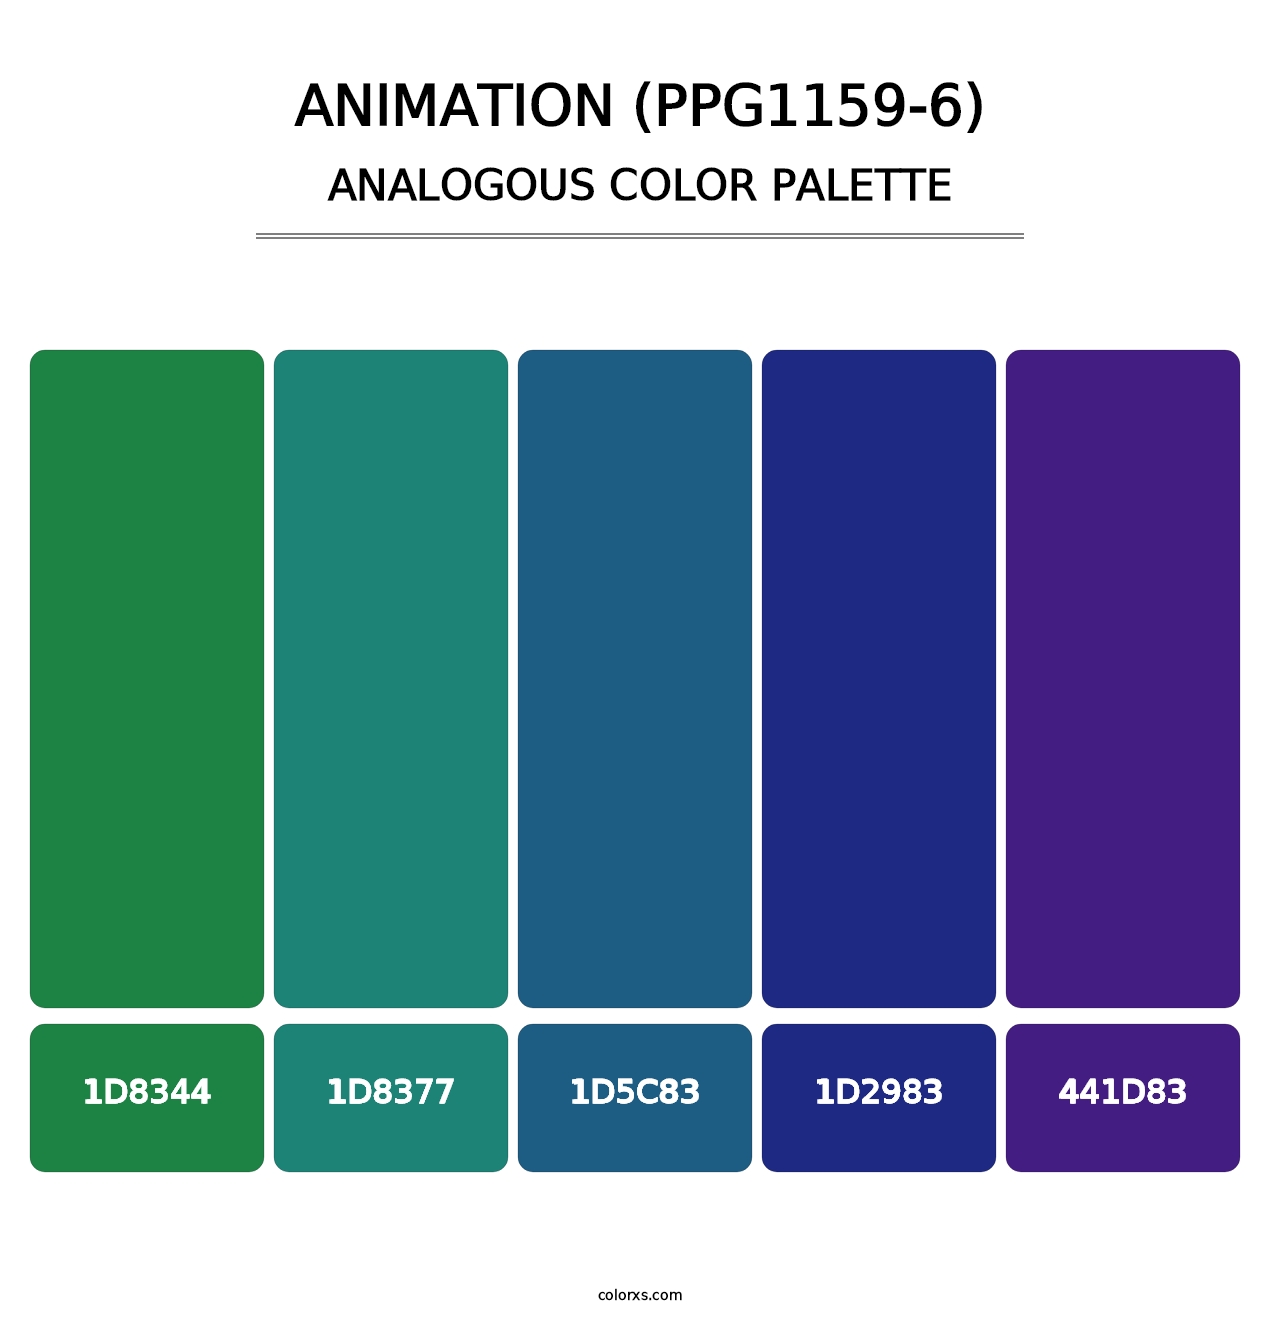 Animation (PPG1159-6) - Analogous Color Palette